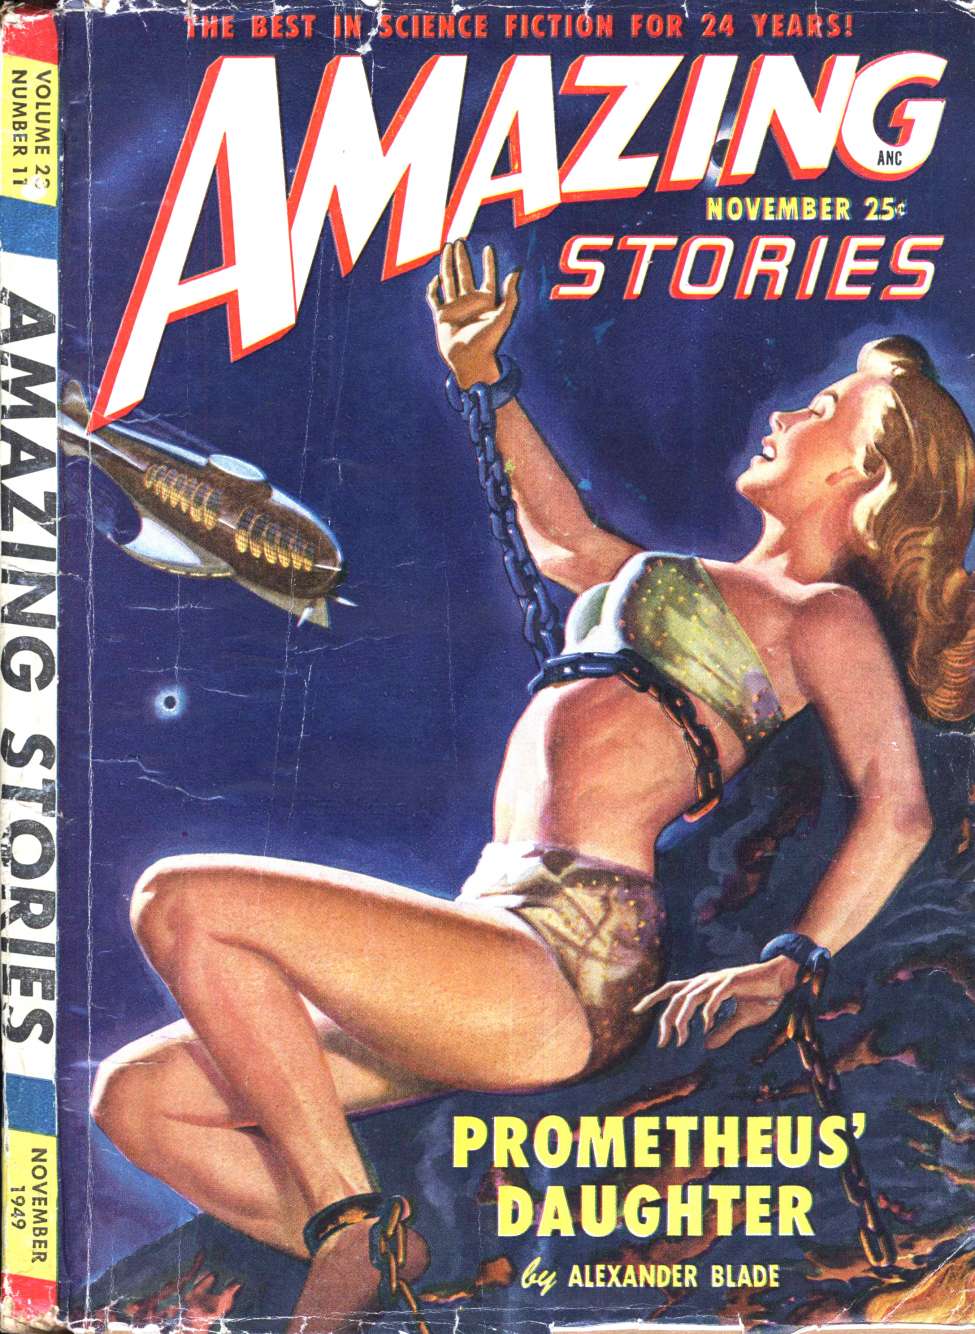 Comic Book Cover For Amazing Stories v23 11 - Prometheus' Daughter - Alexander Blade